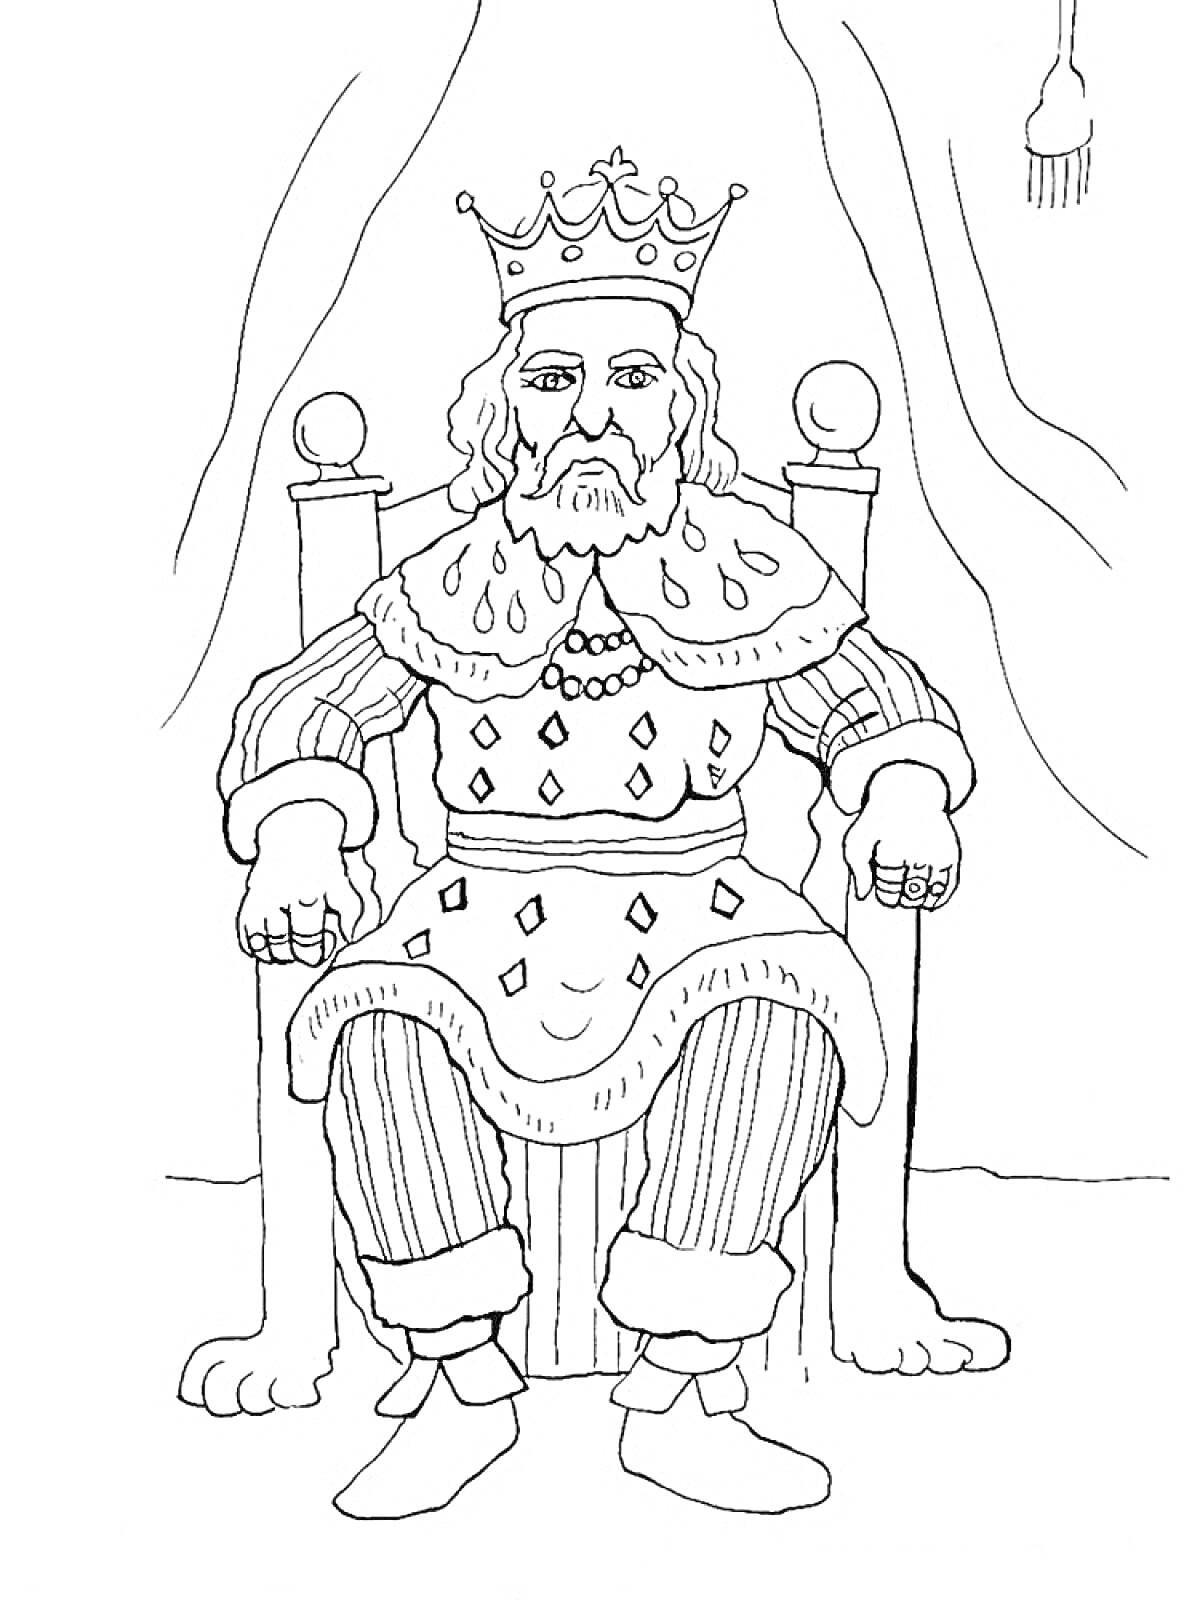 Раскраска Царь сидящий на троне с короной